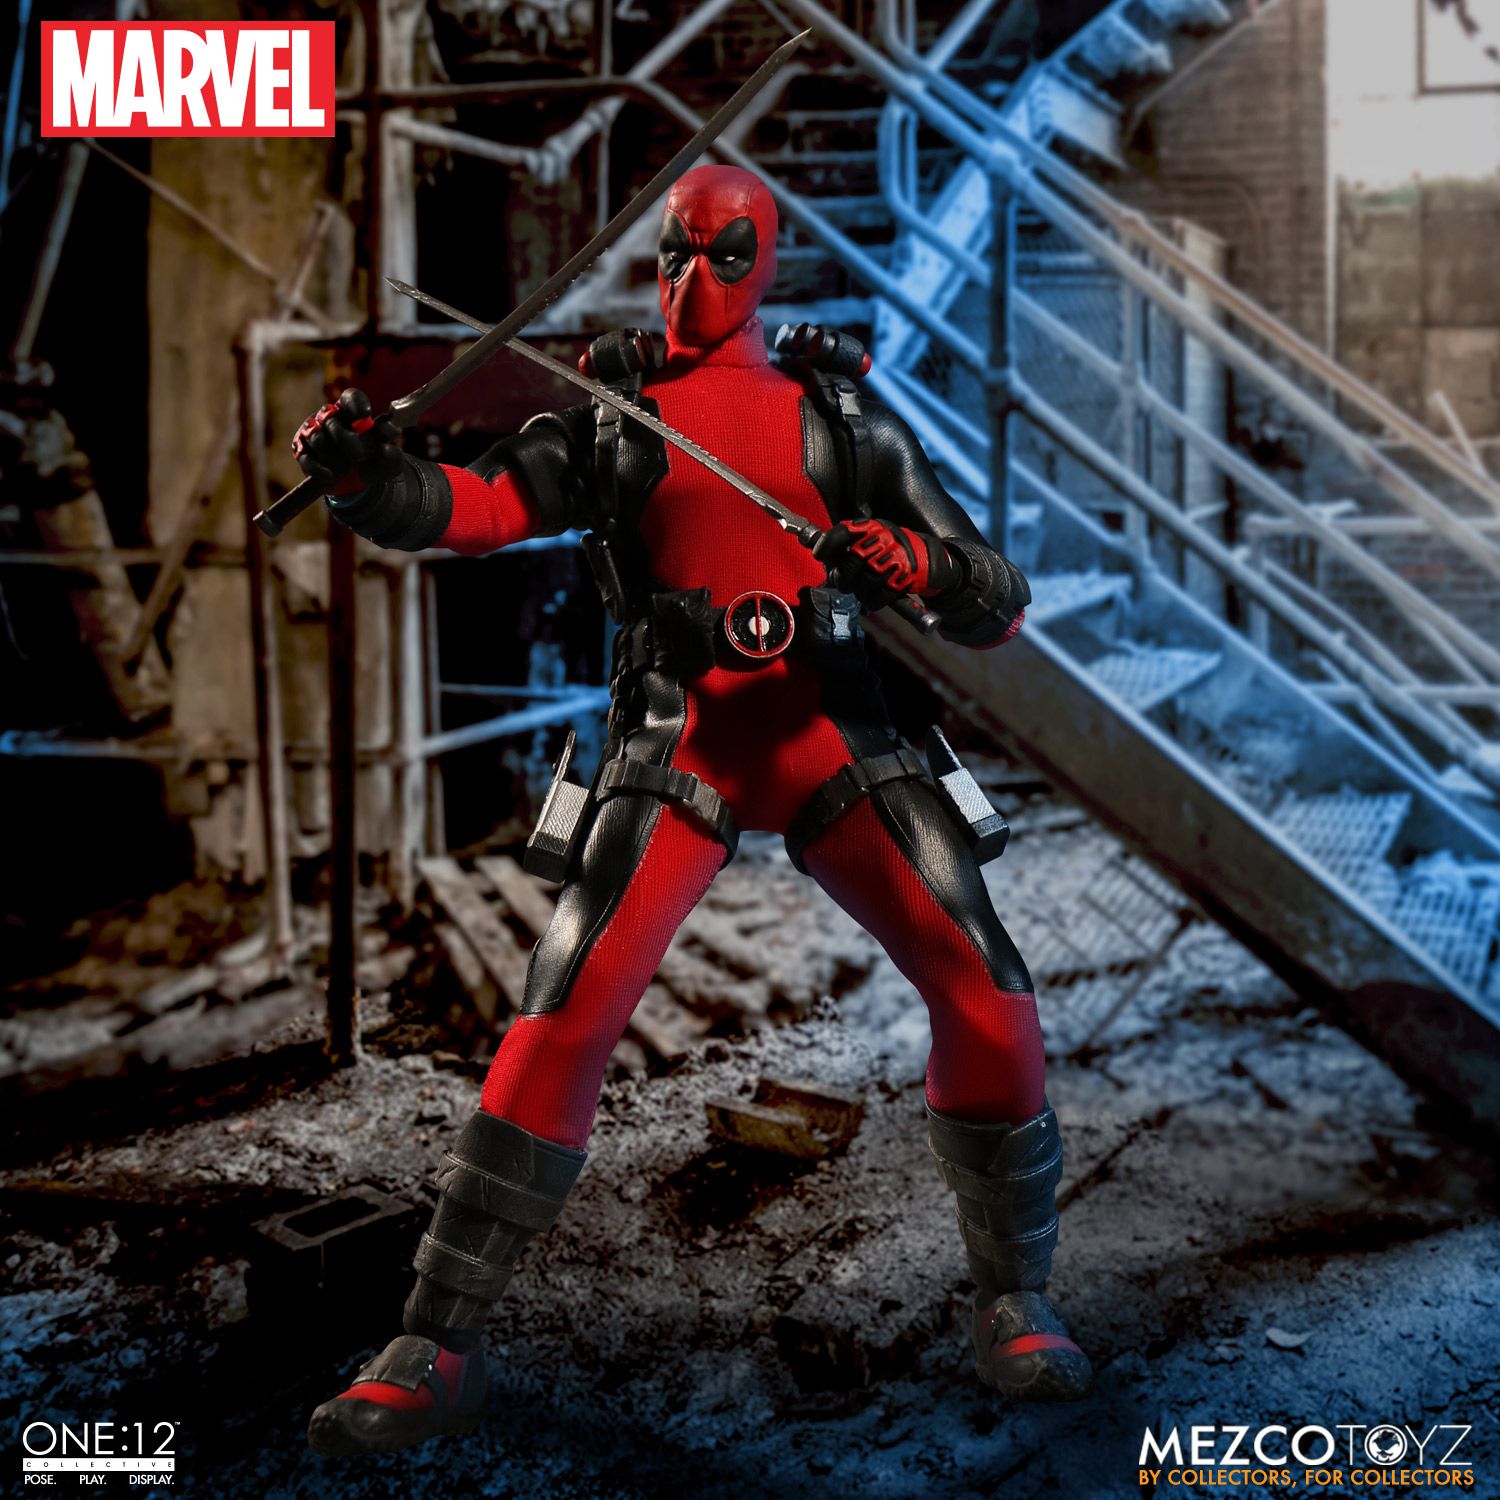 Details about   Mezco One:12 Collective Deadpool Red Surprised Head Sculpt Marvel AUTHENTIC